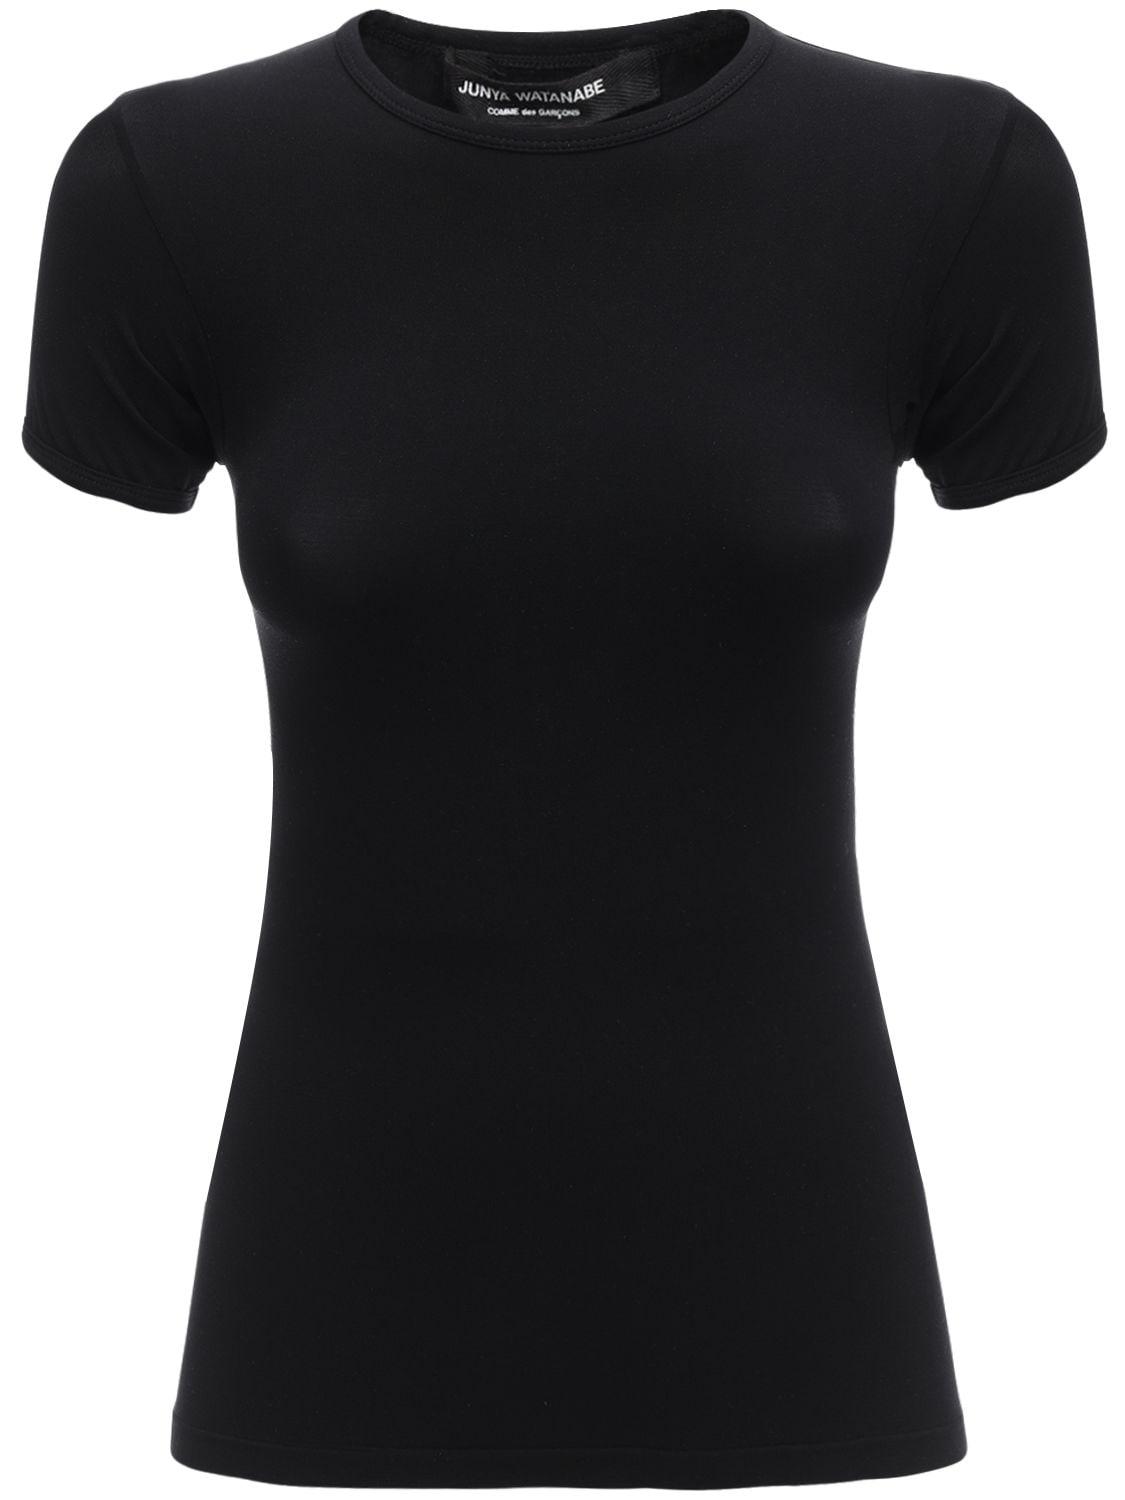 Junya Watanabe Synthetic Stretch Nylon Jersey T-shirt in Black - Lyst